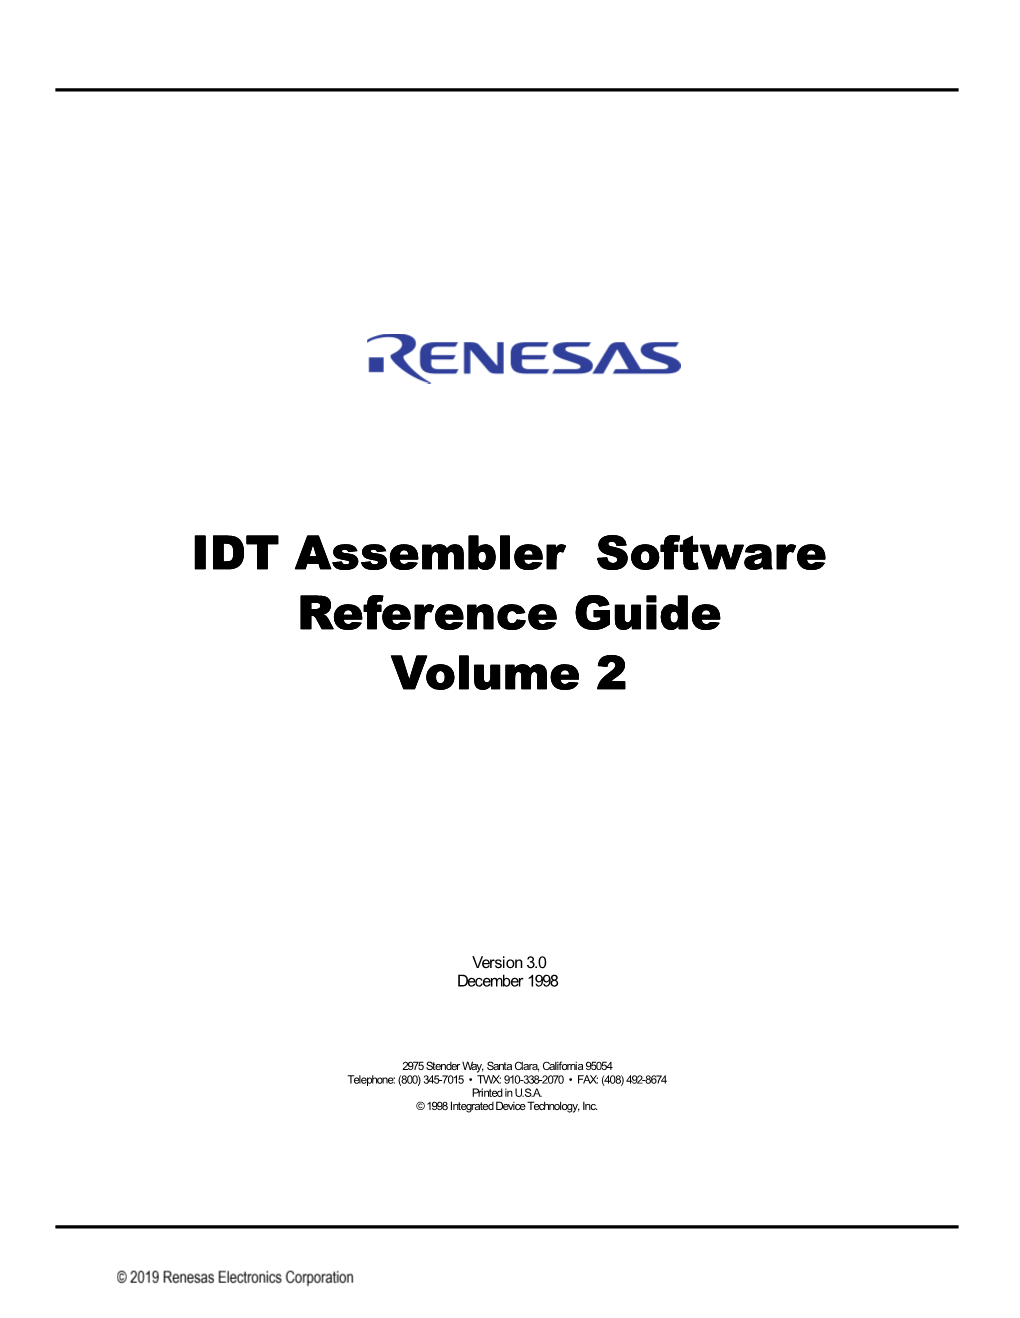 IDT Assembler Software Reference Guide Vol. 2